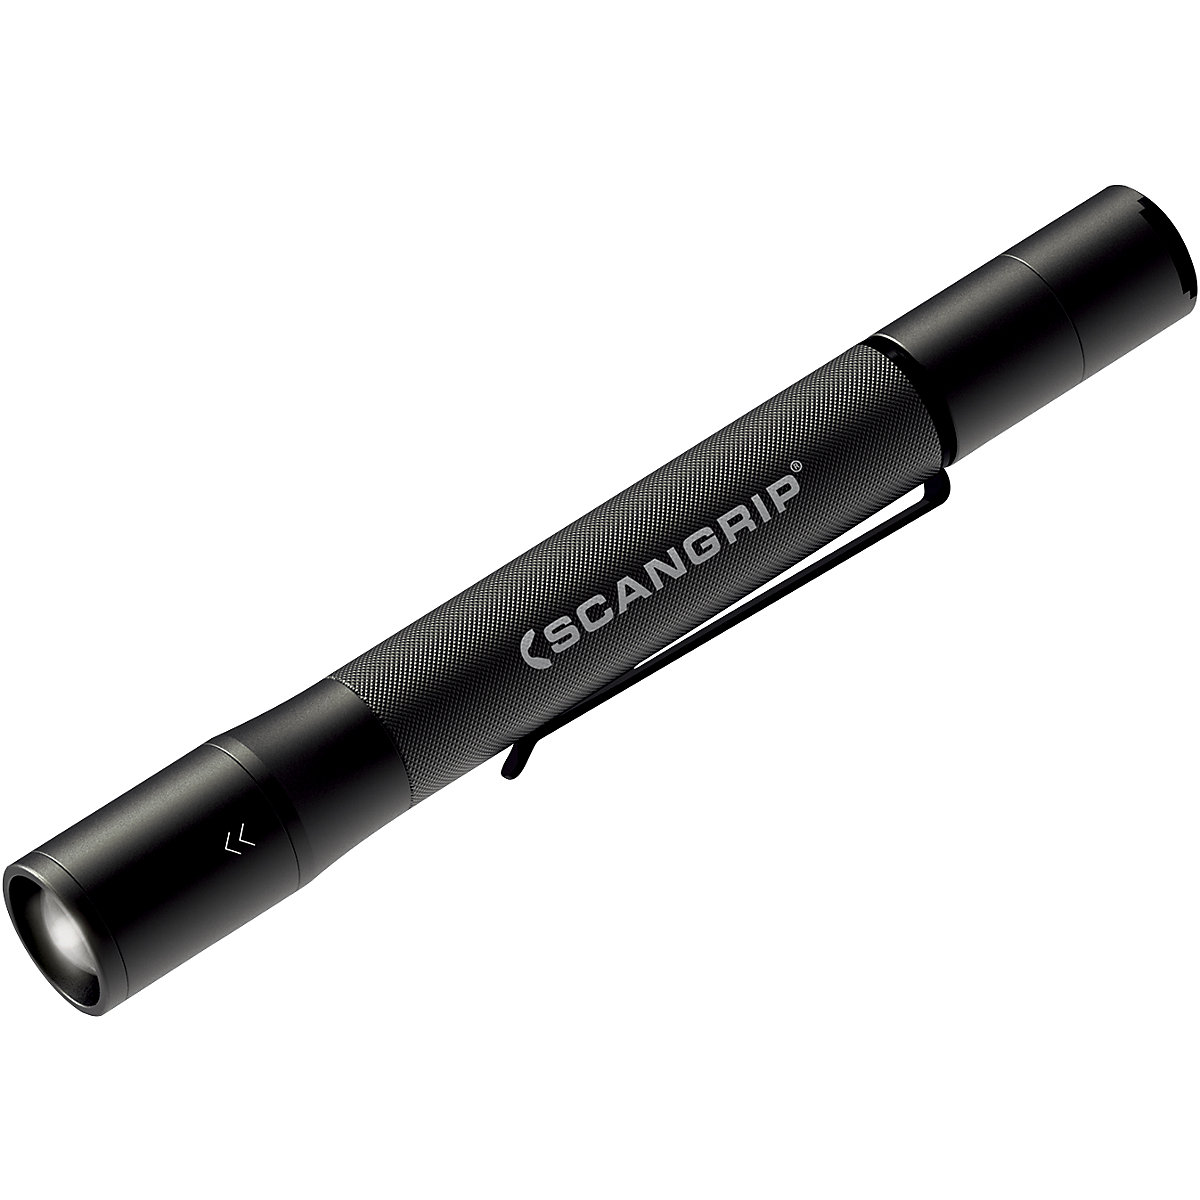 Akumulatorowa latarka długopisowa LED FLASH PEN R – SCANGRIP (Zdjęcie produktu 6)-5